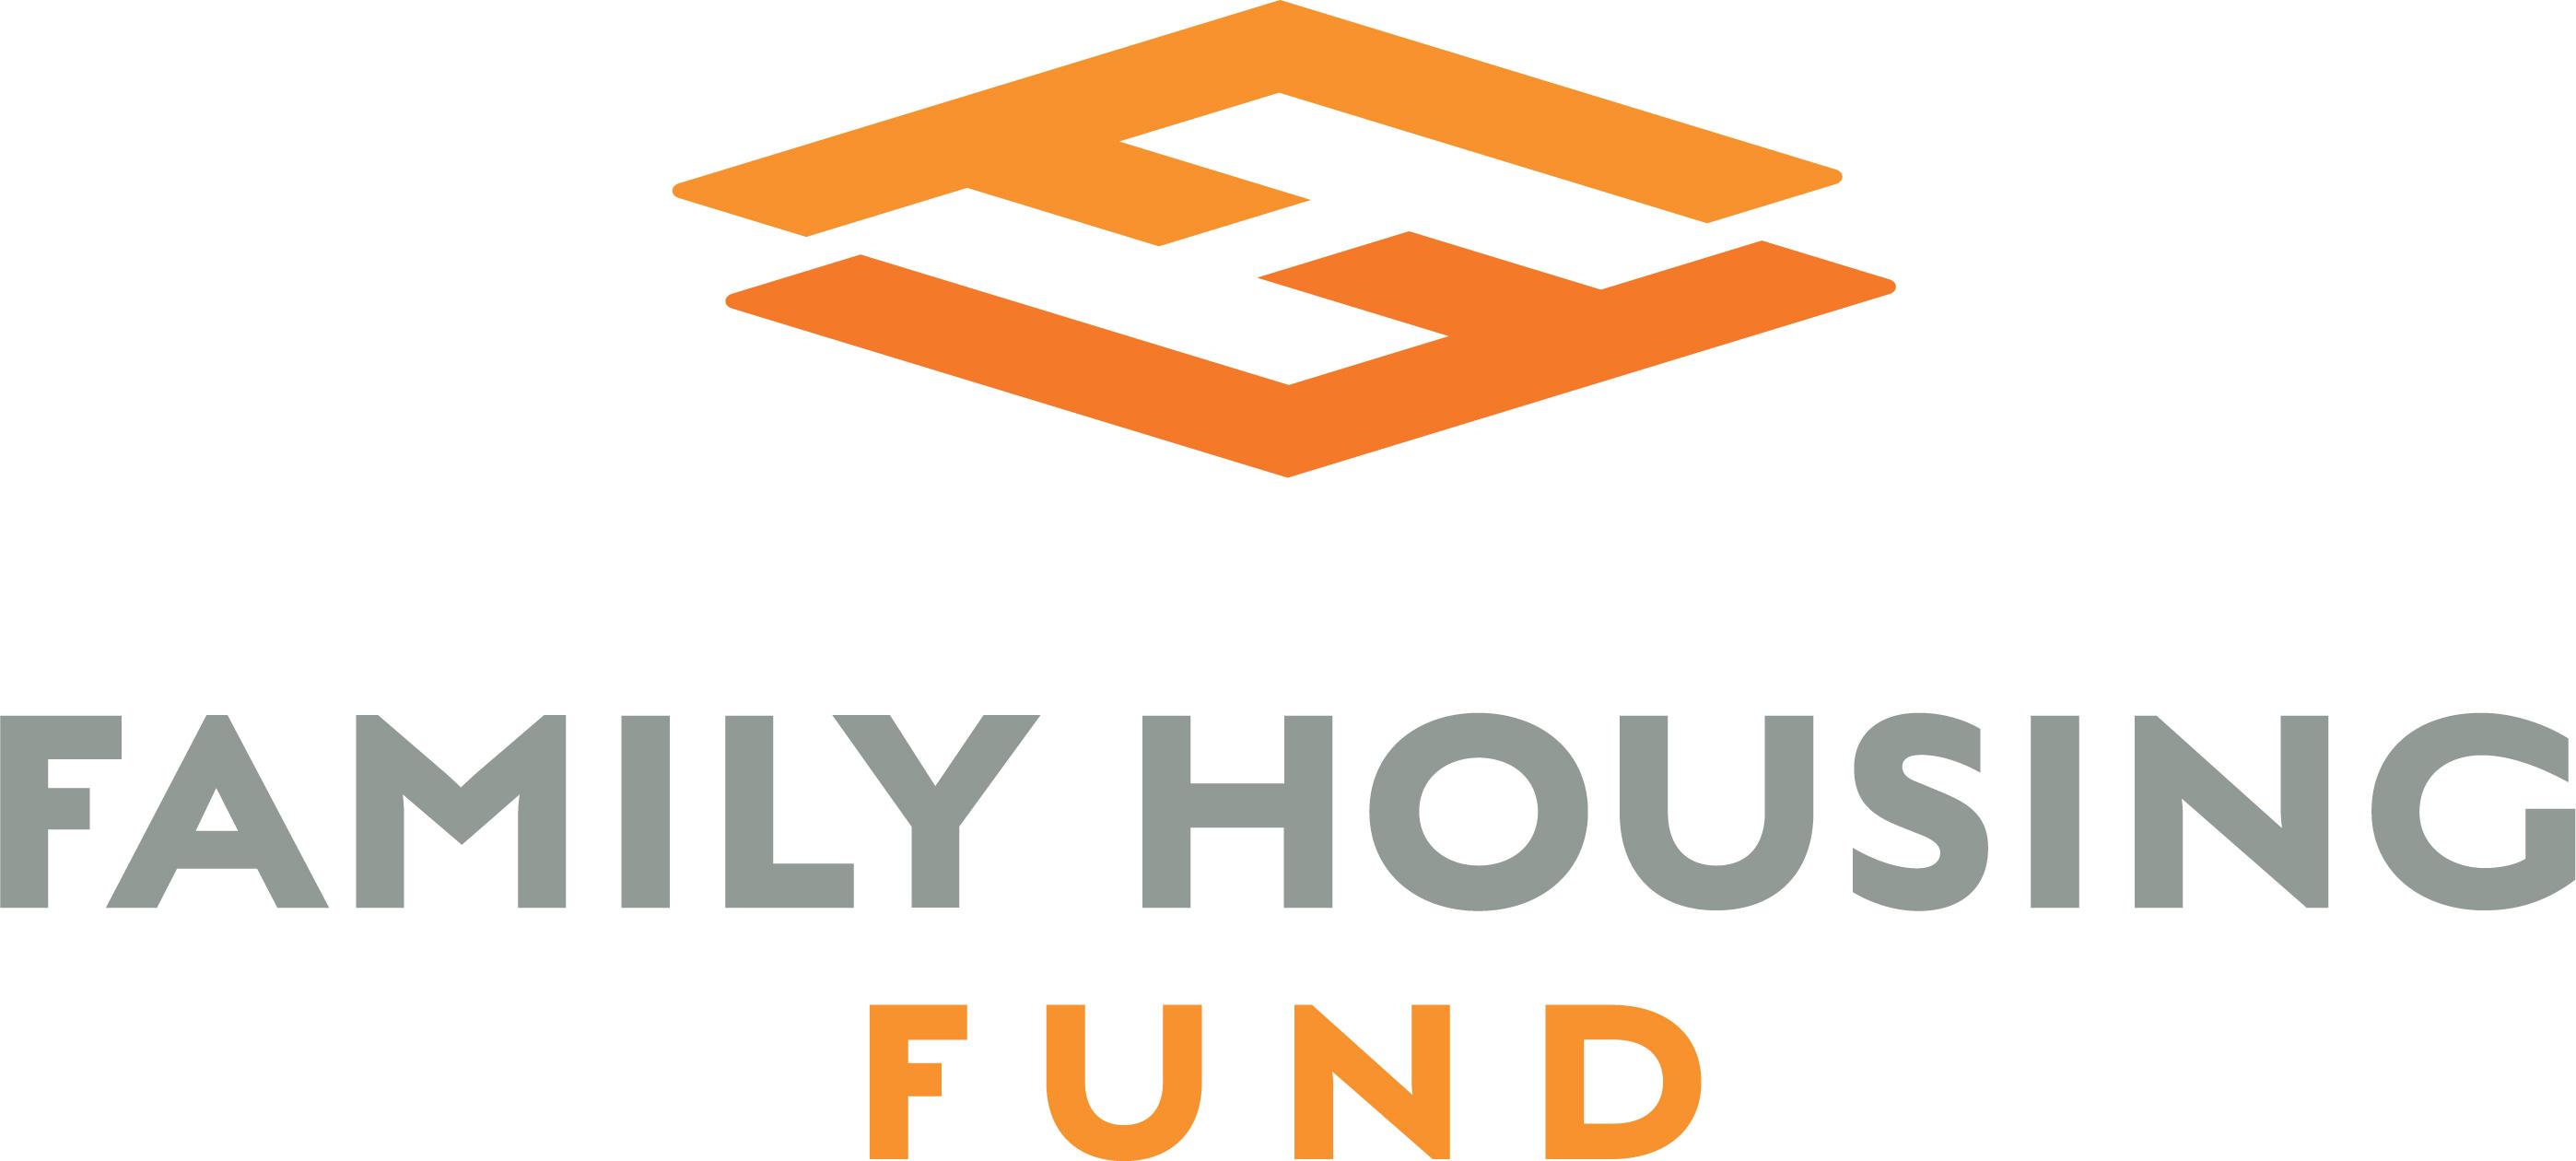 Fund Logo - Family Housing Fund